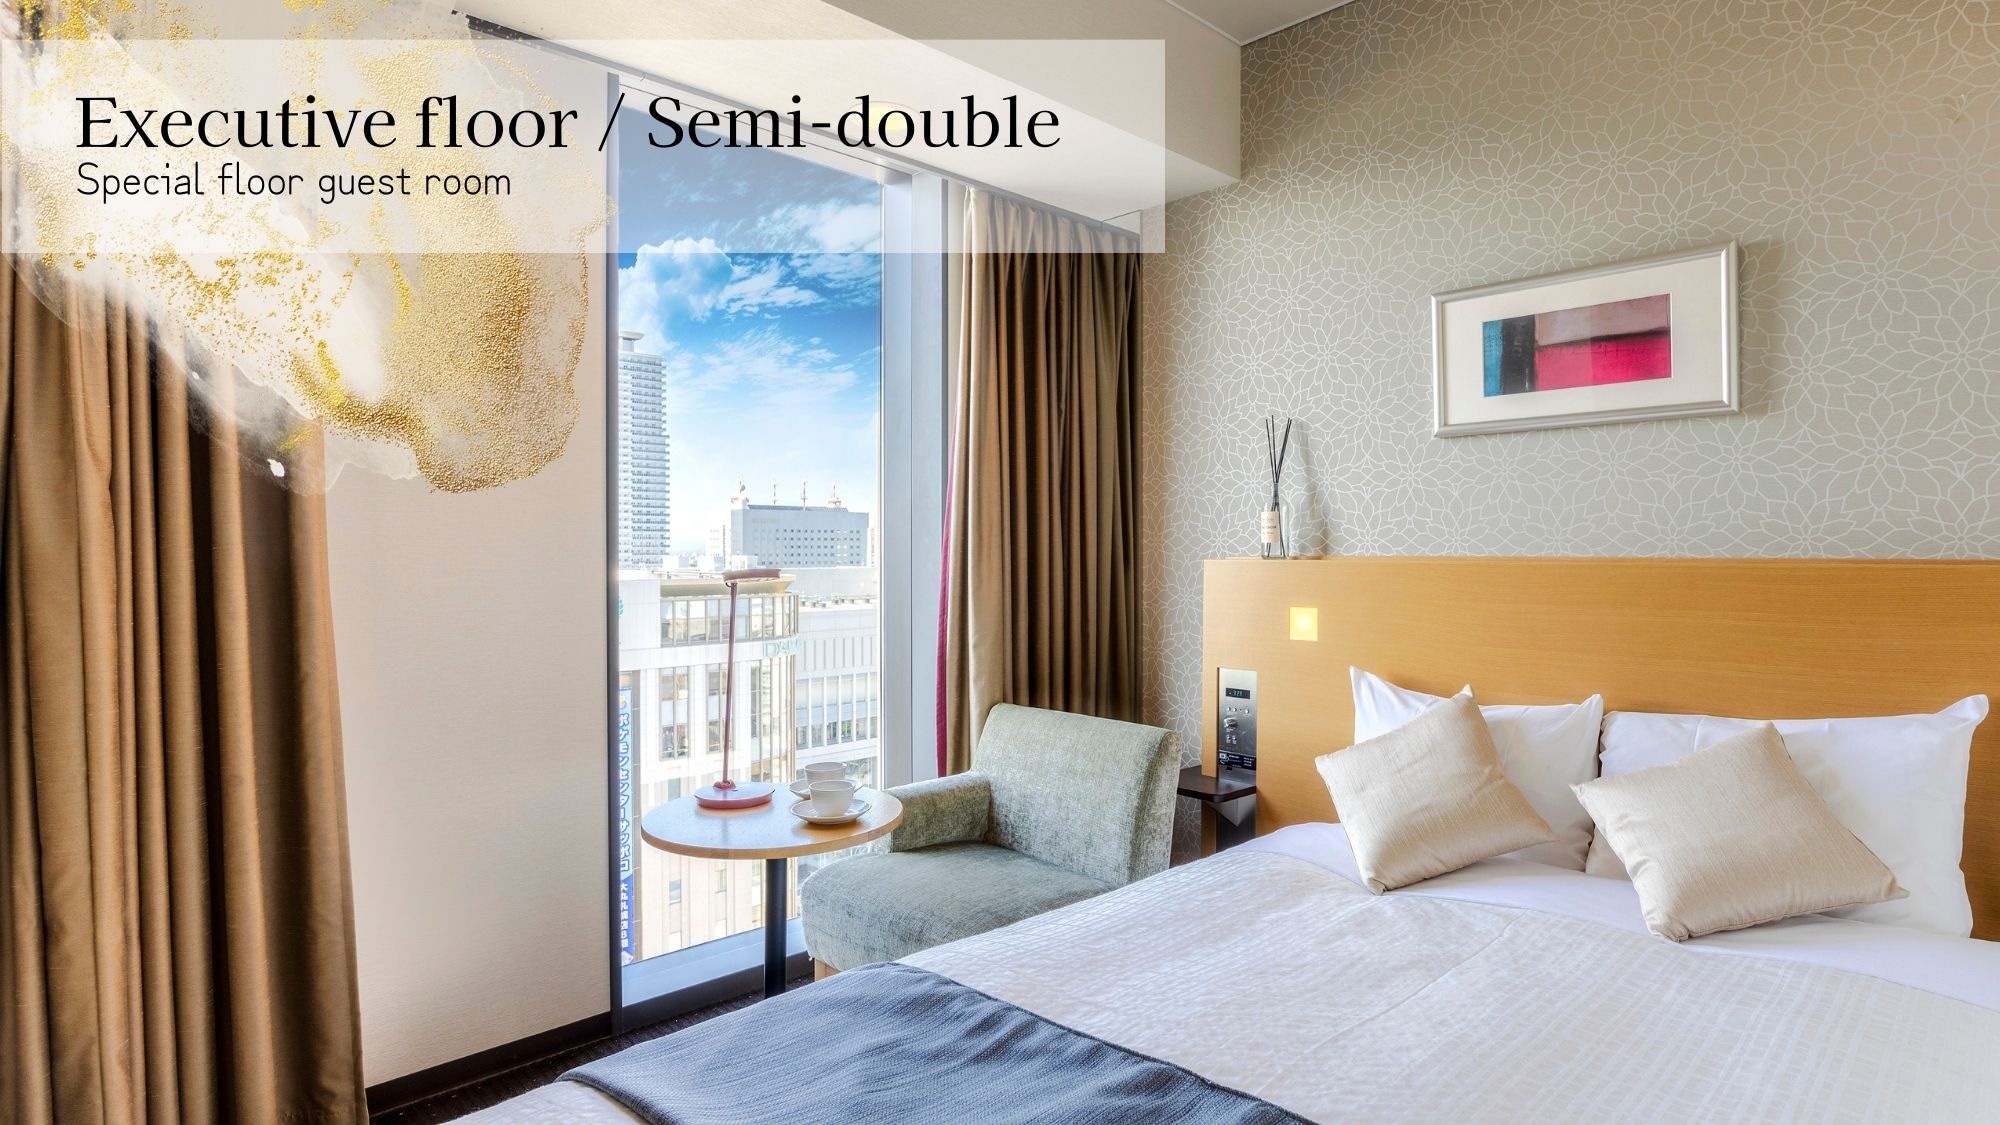 [Lantai eksekutif di lantai atas] Semi-double/15 meter persegi: 1 double (lebar 140cm), unit kamar mandi